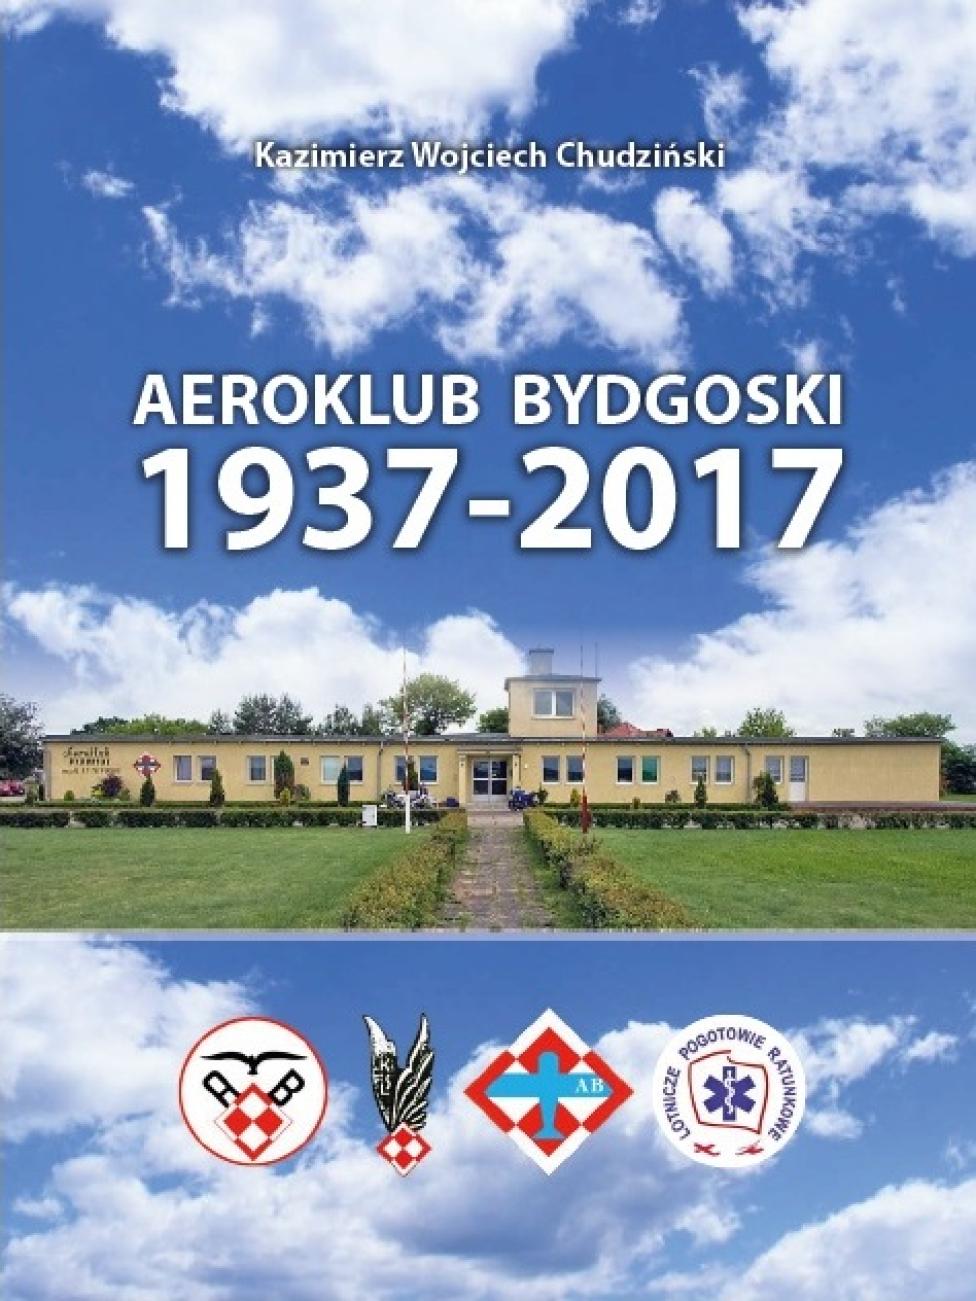 Książka "Aeroklub Bydgoski 1937-2017" (fot. aeroklubbydgoski.pl)